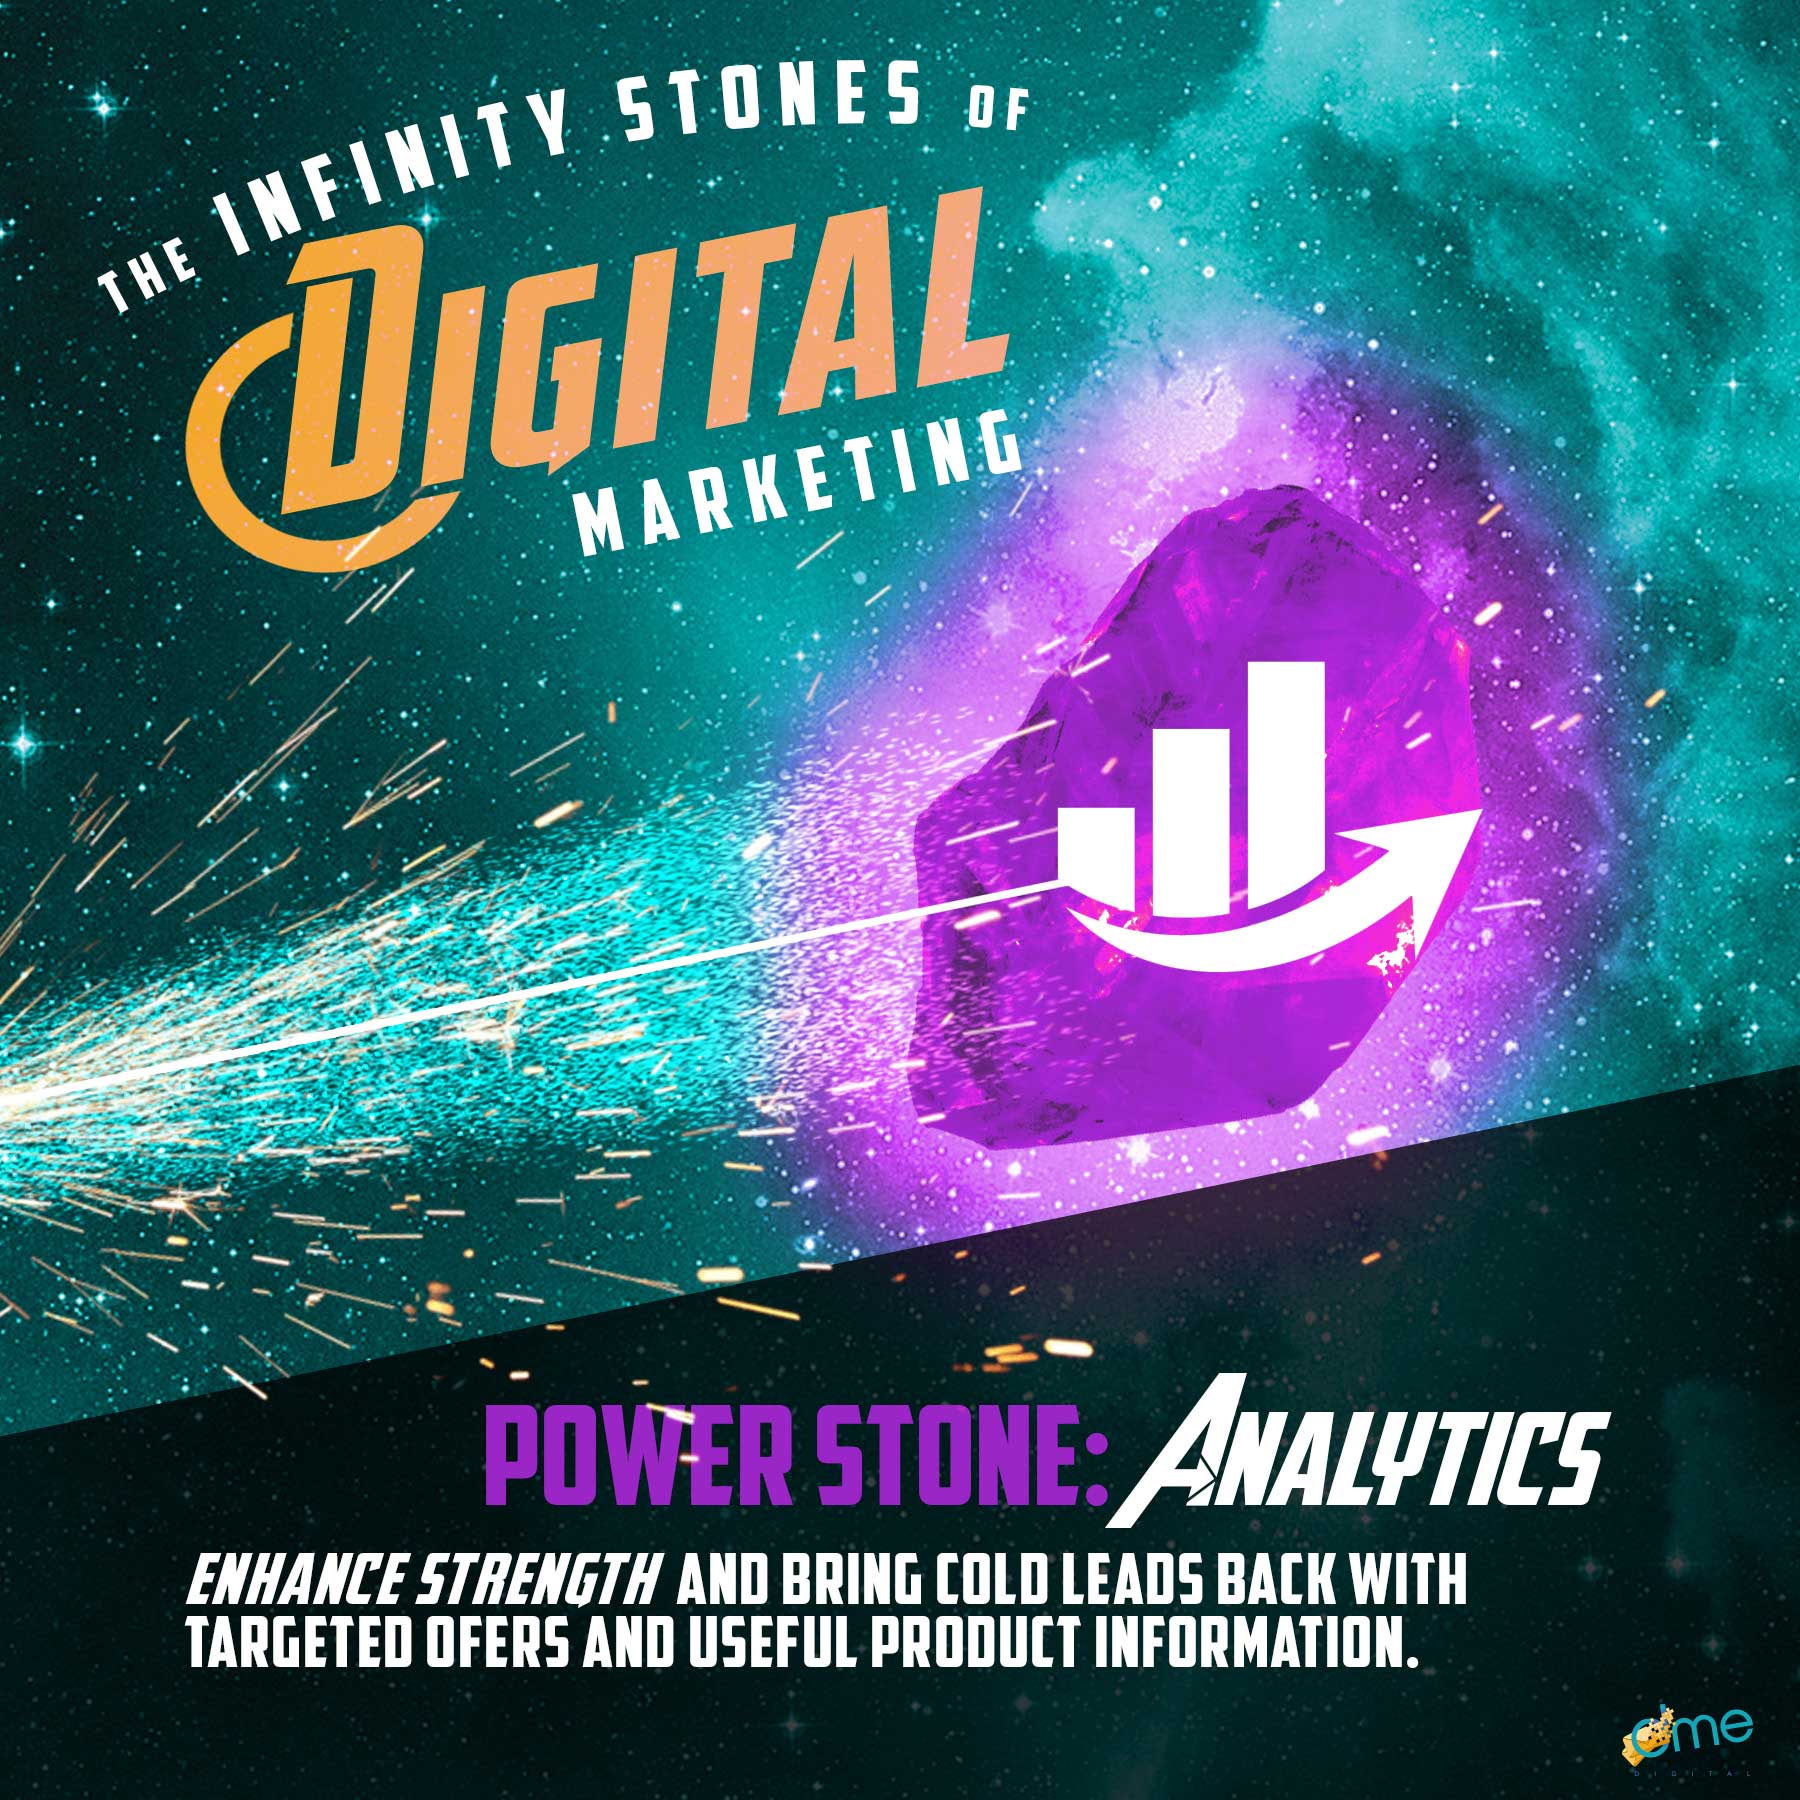 The power stone of digital marketing is analytics.